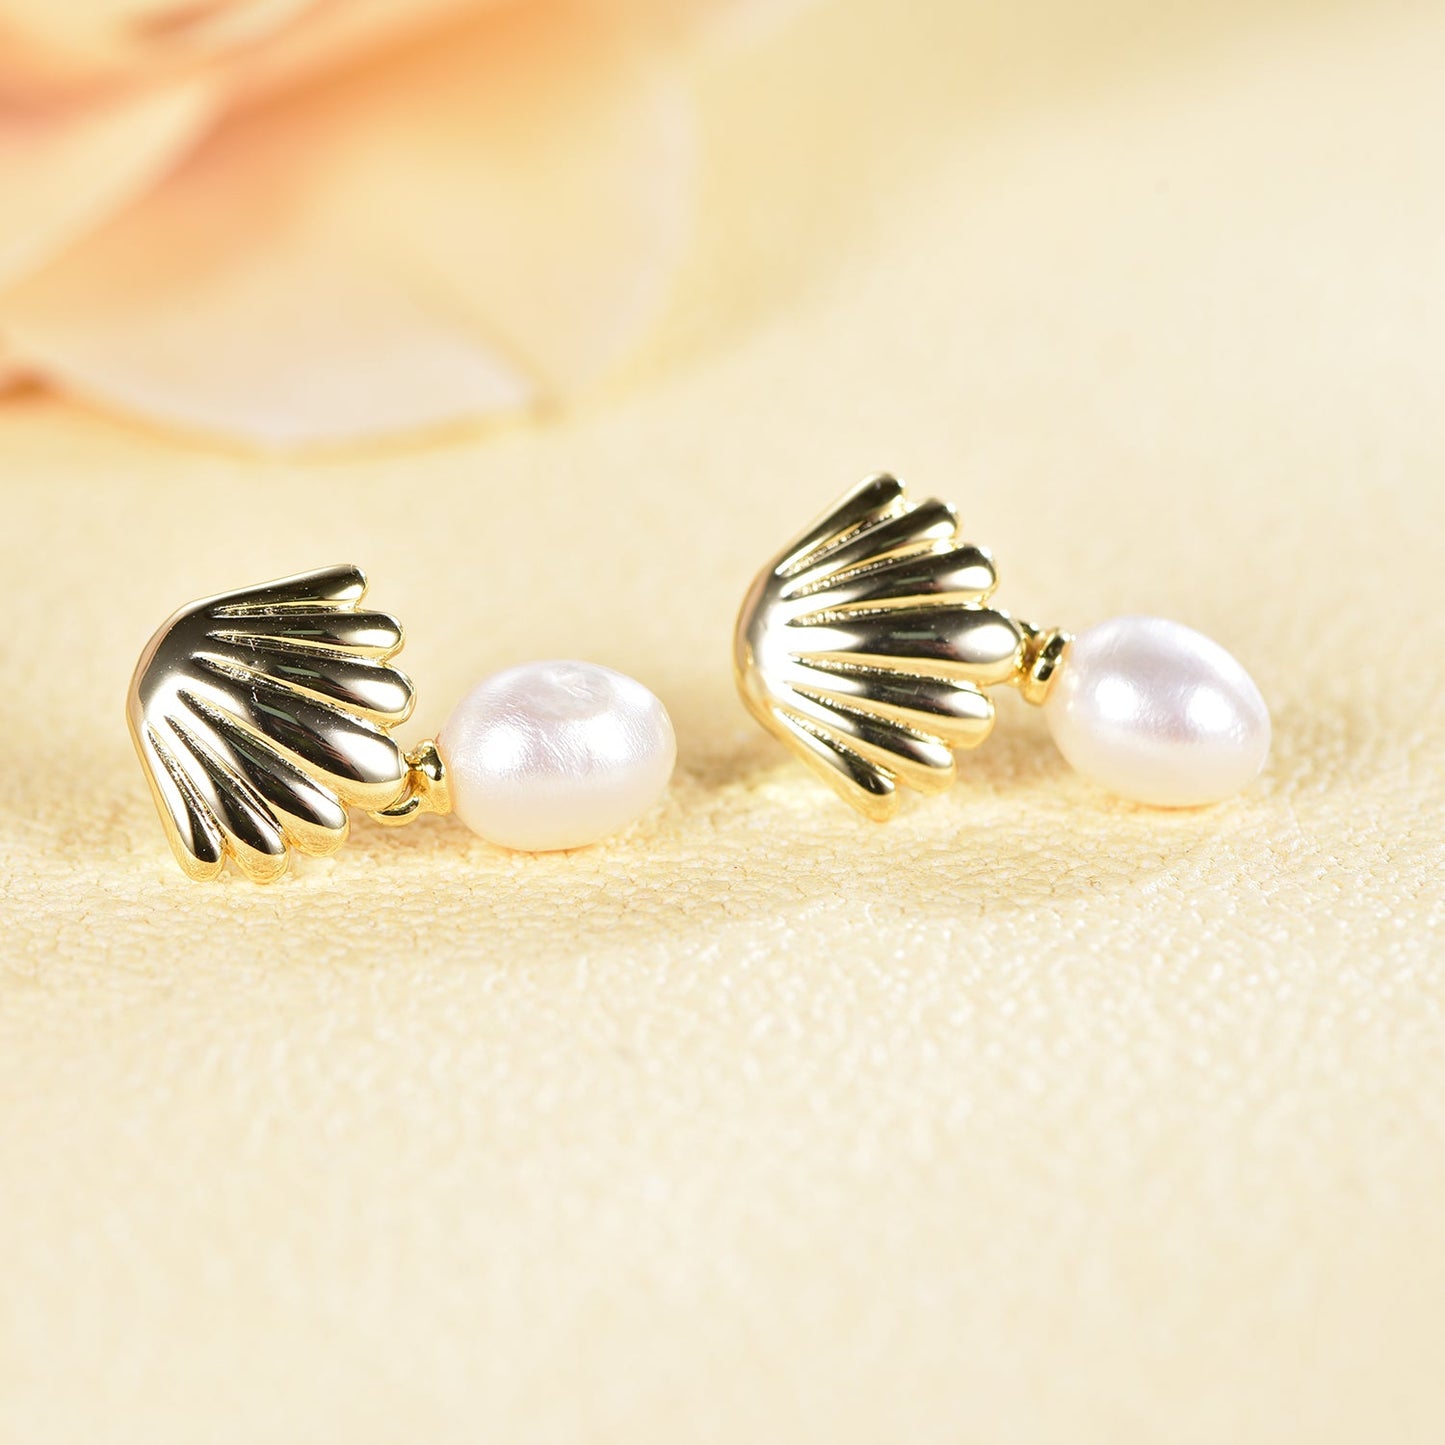 925 silver pearl earrings with 14K gold plating KE33149 Kirin Jewelry